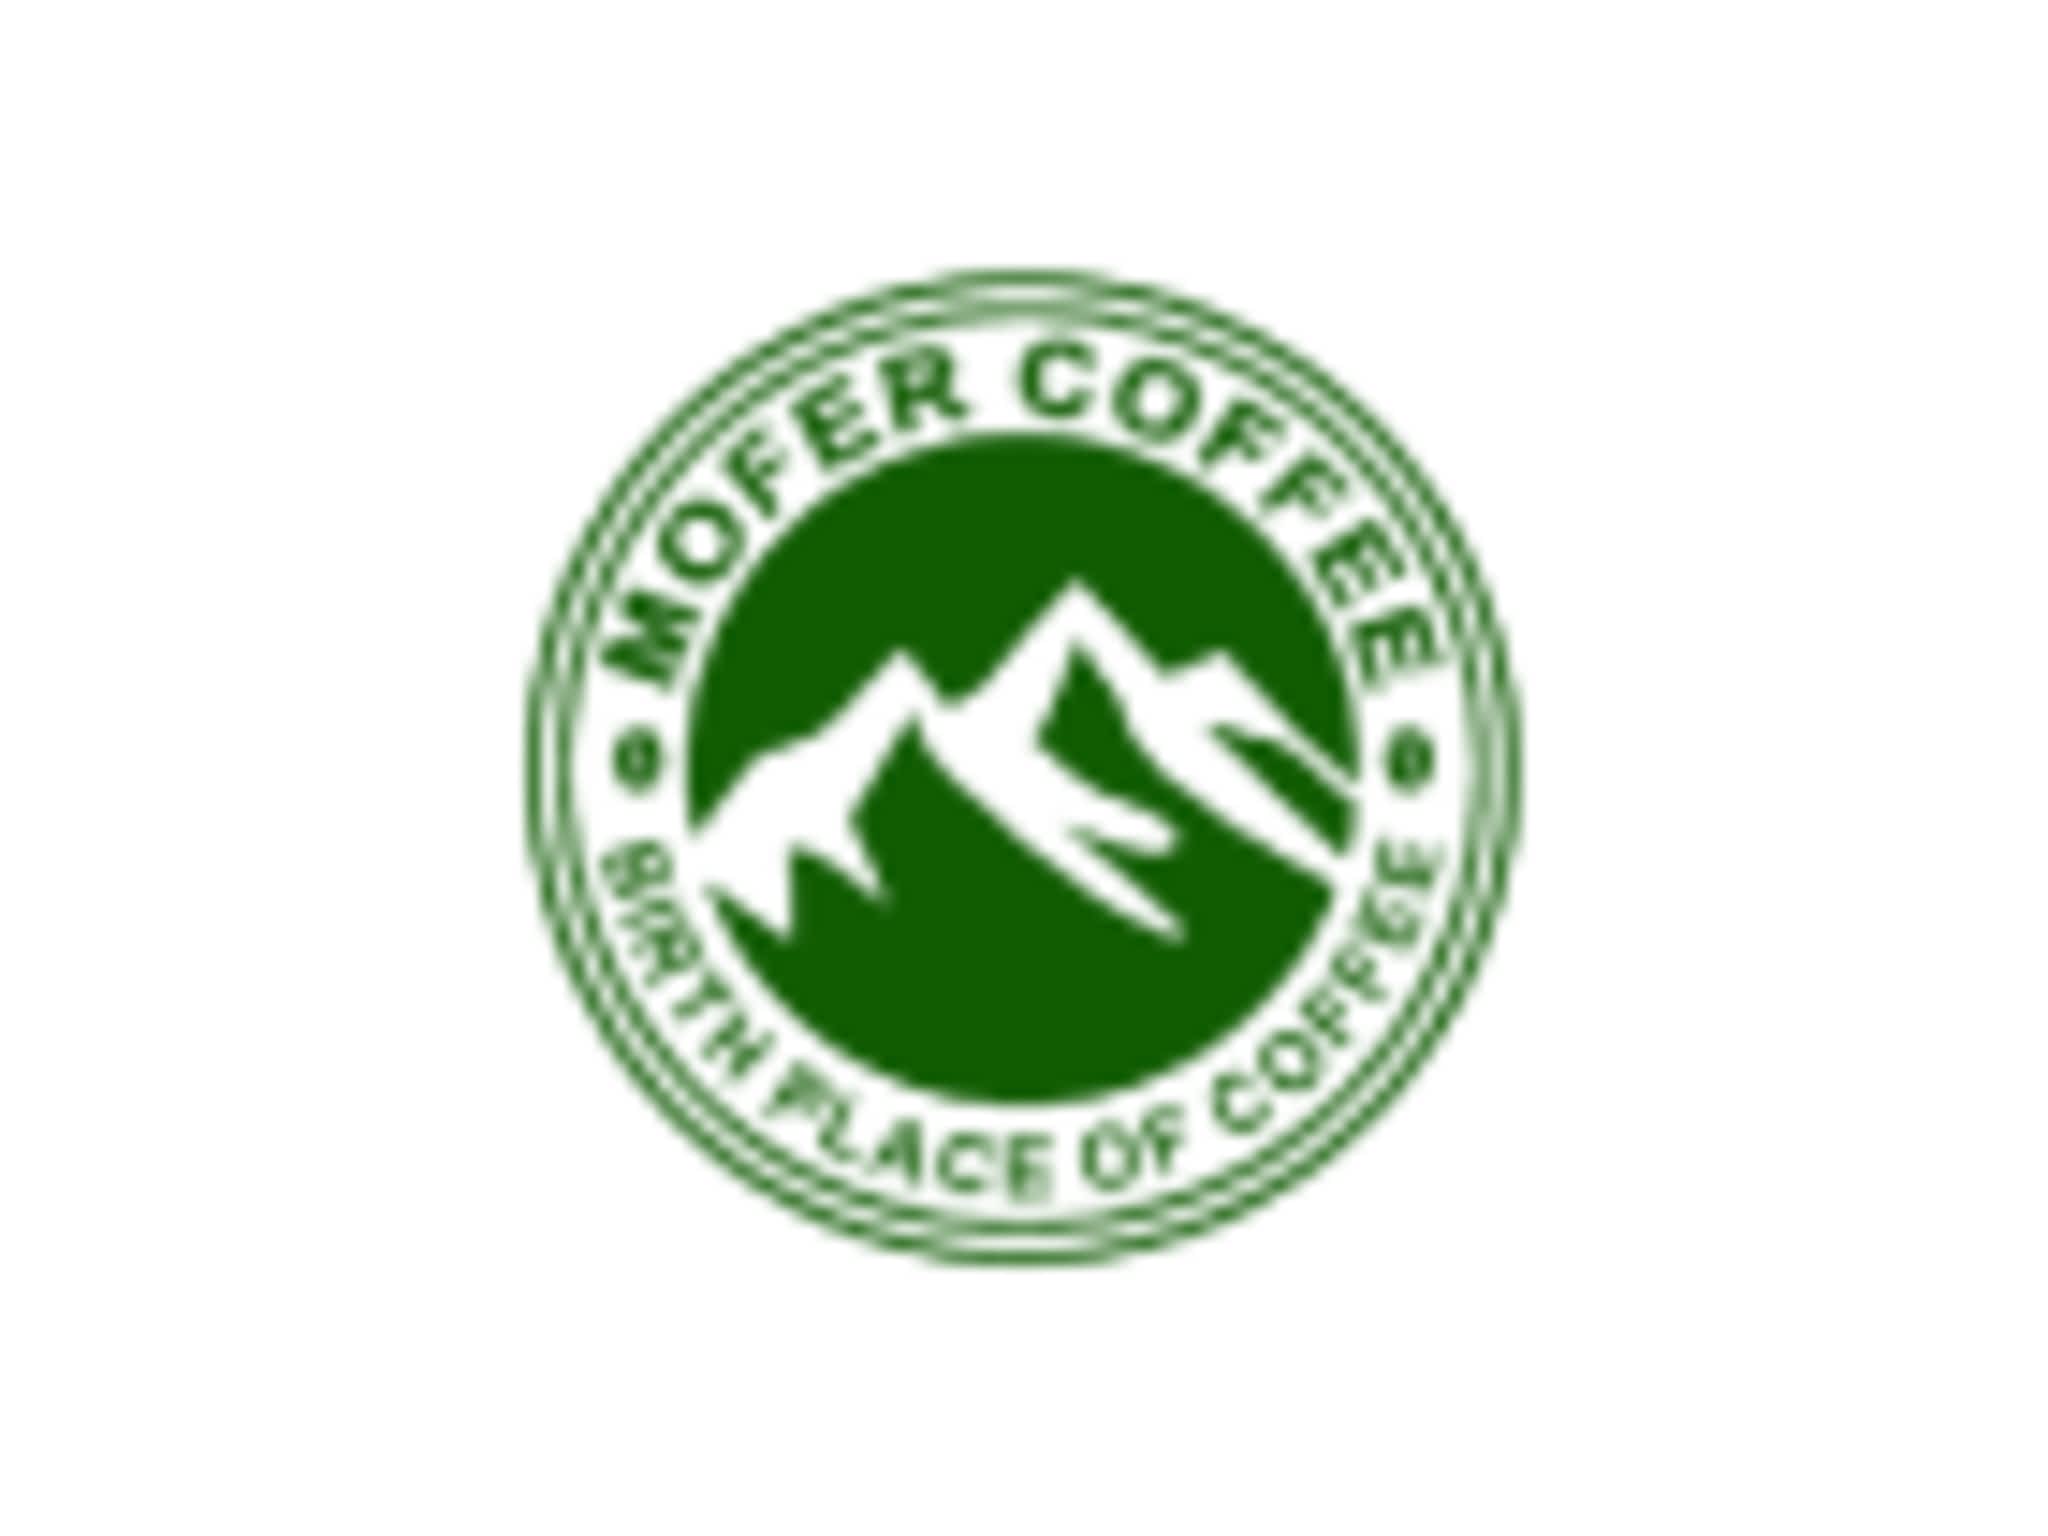 photo Mofer Coffee